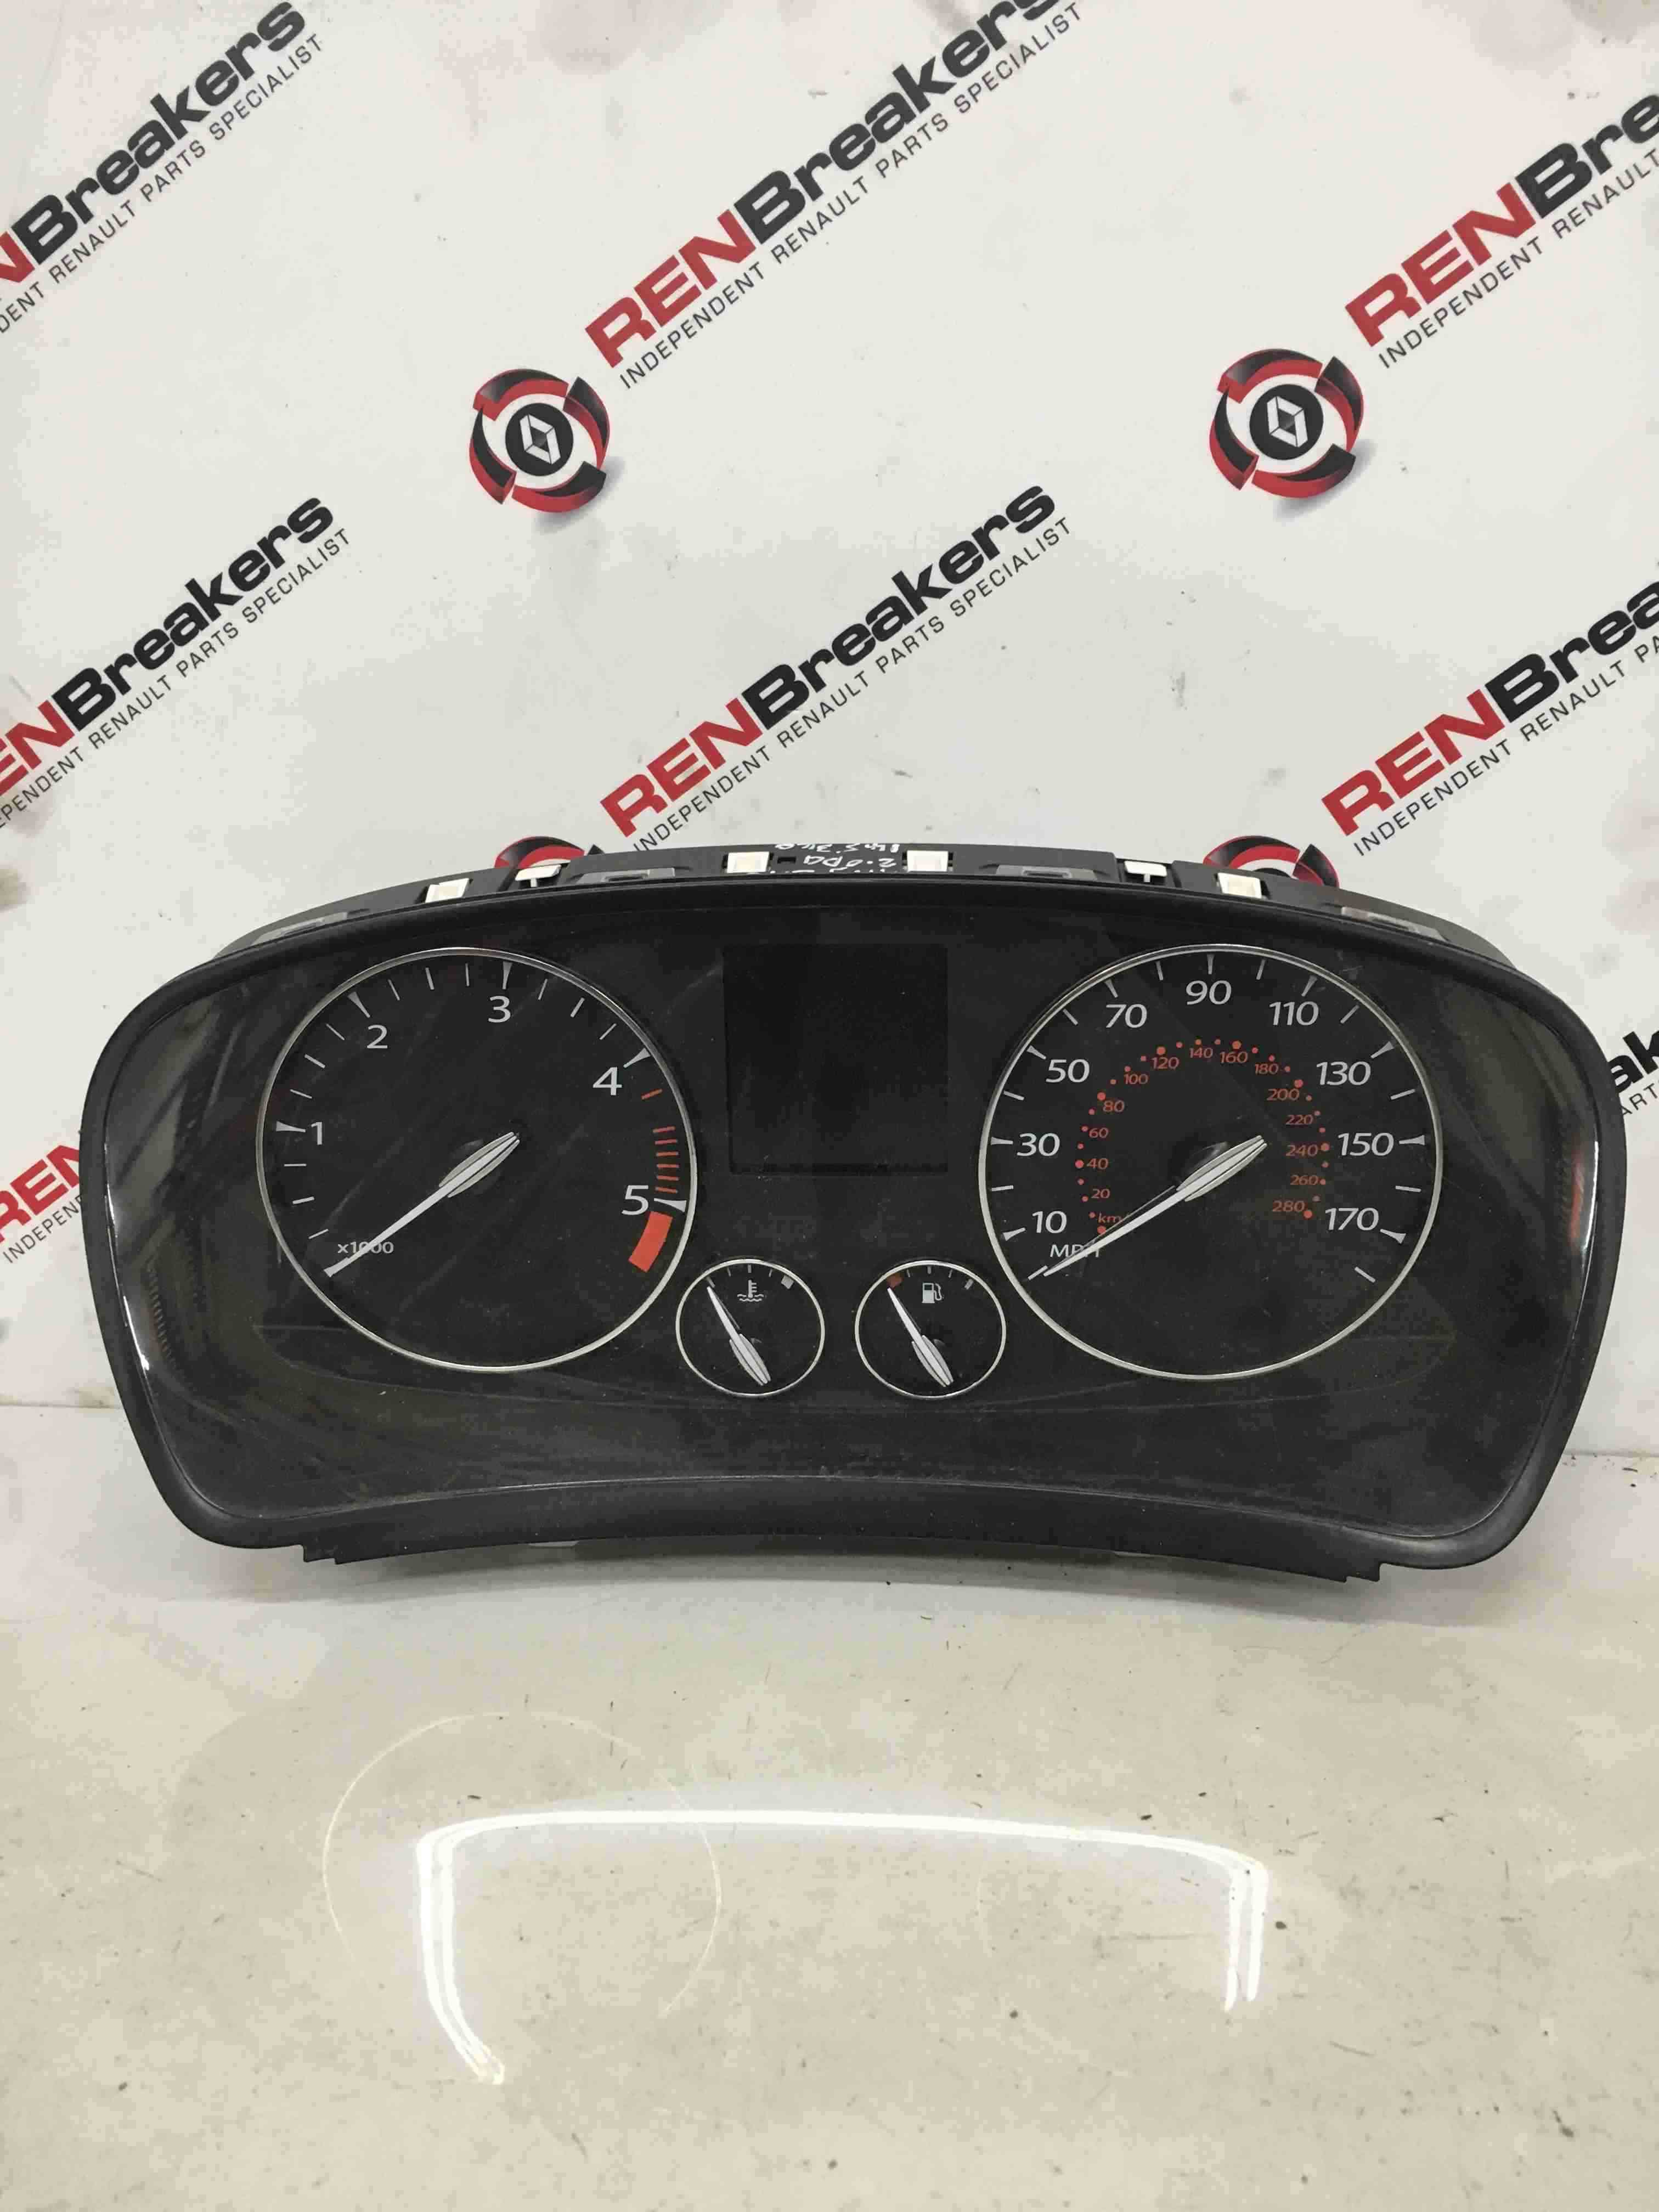 Renault Laguna MK3 2007-2012 Instrument Panel Dials Gauges Clocks 160k